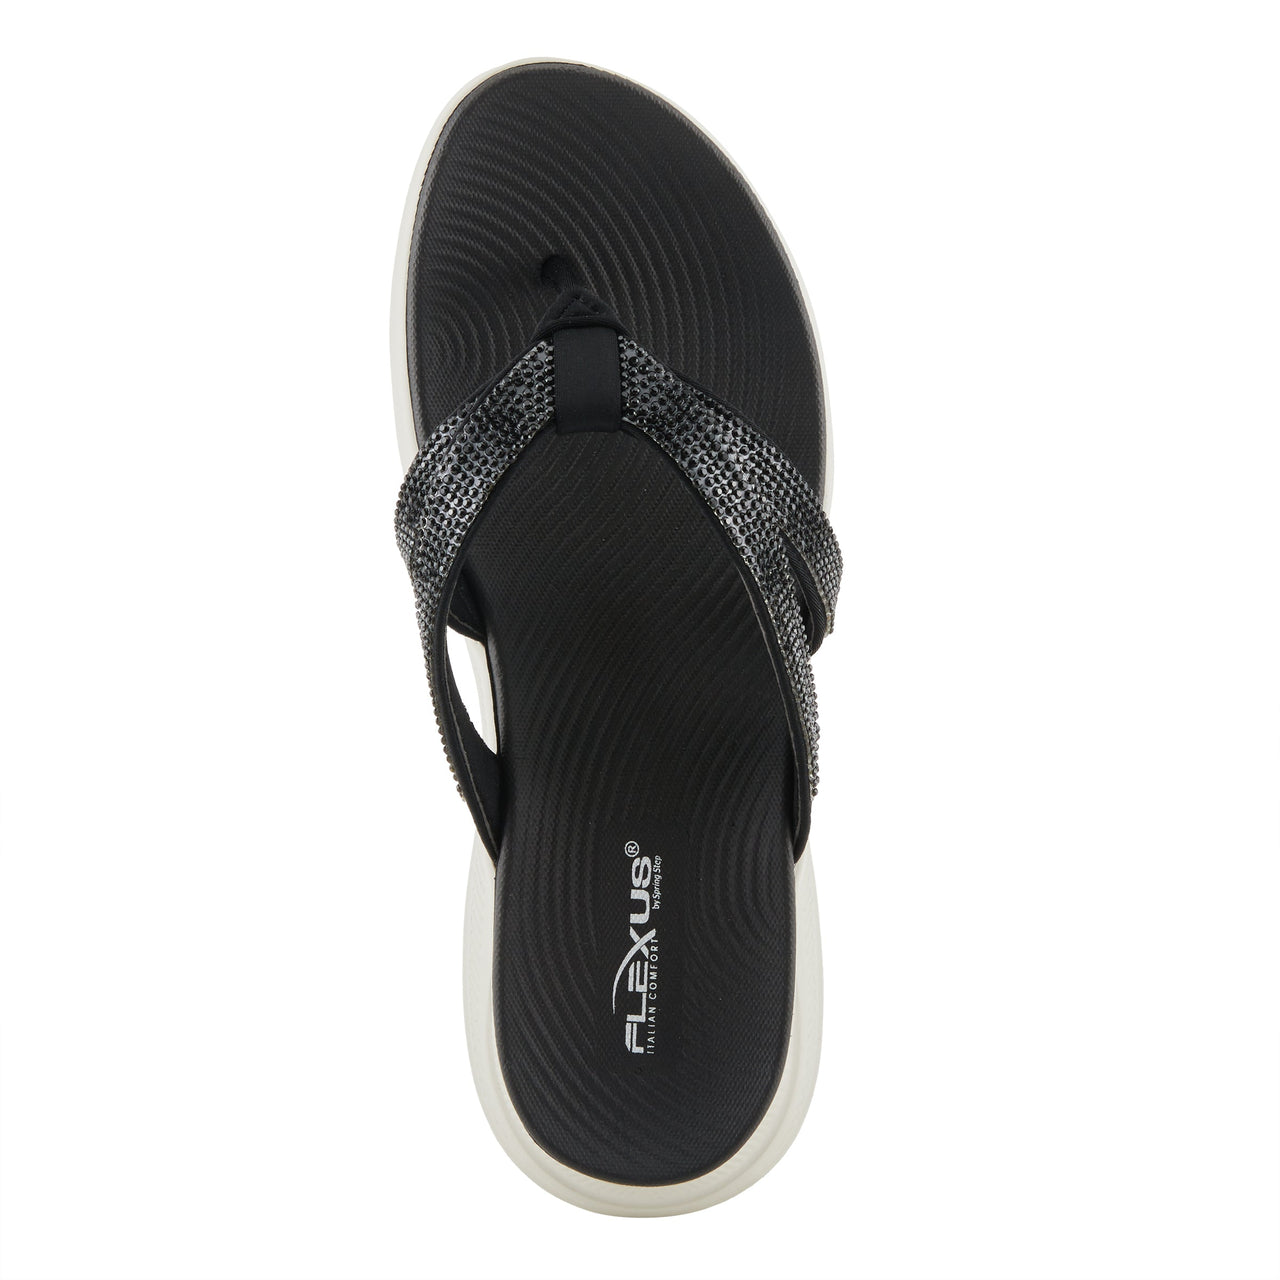 Spring Step Shoes Flexus Ashine Sandals